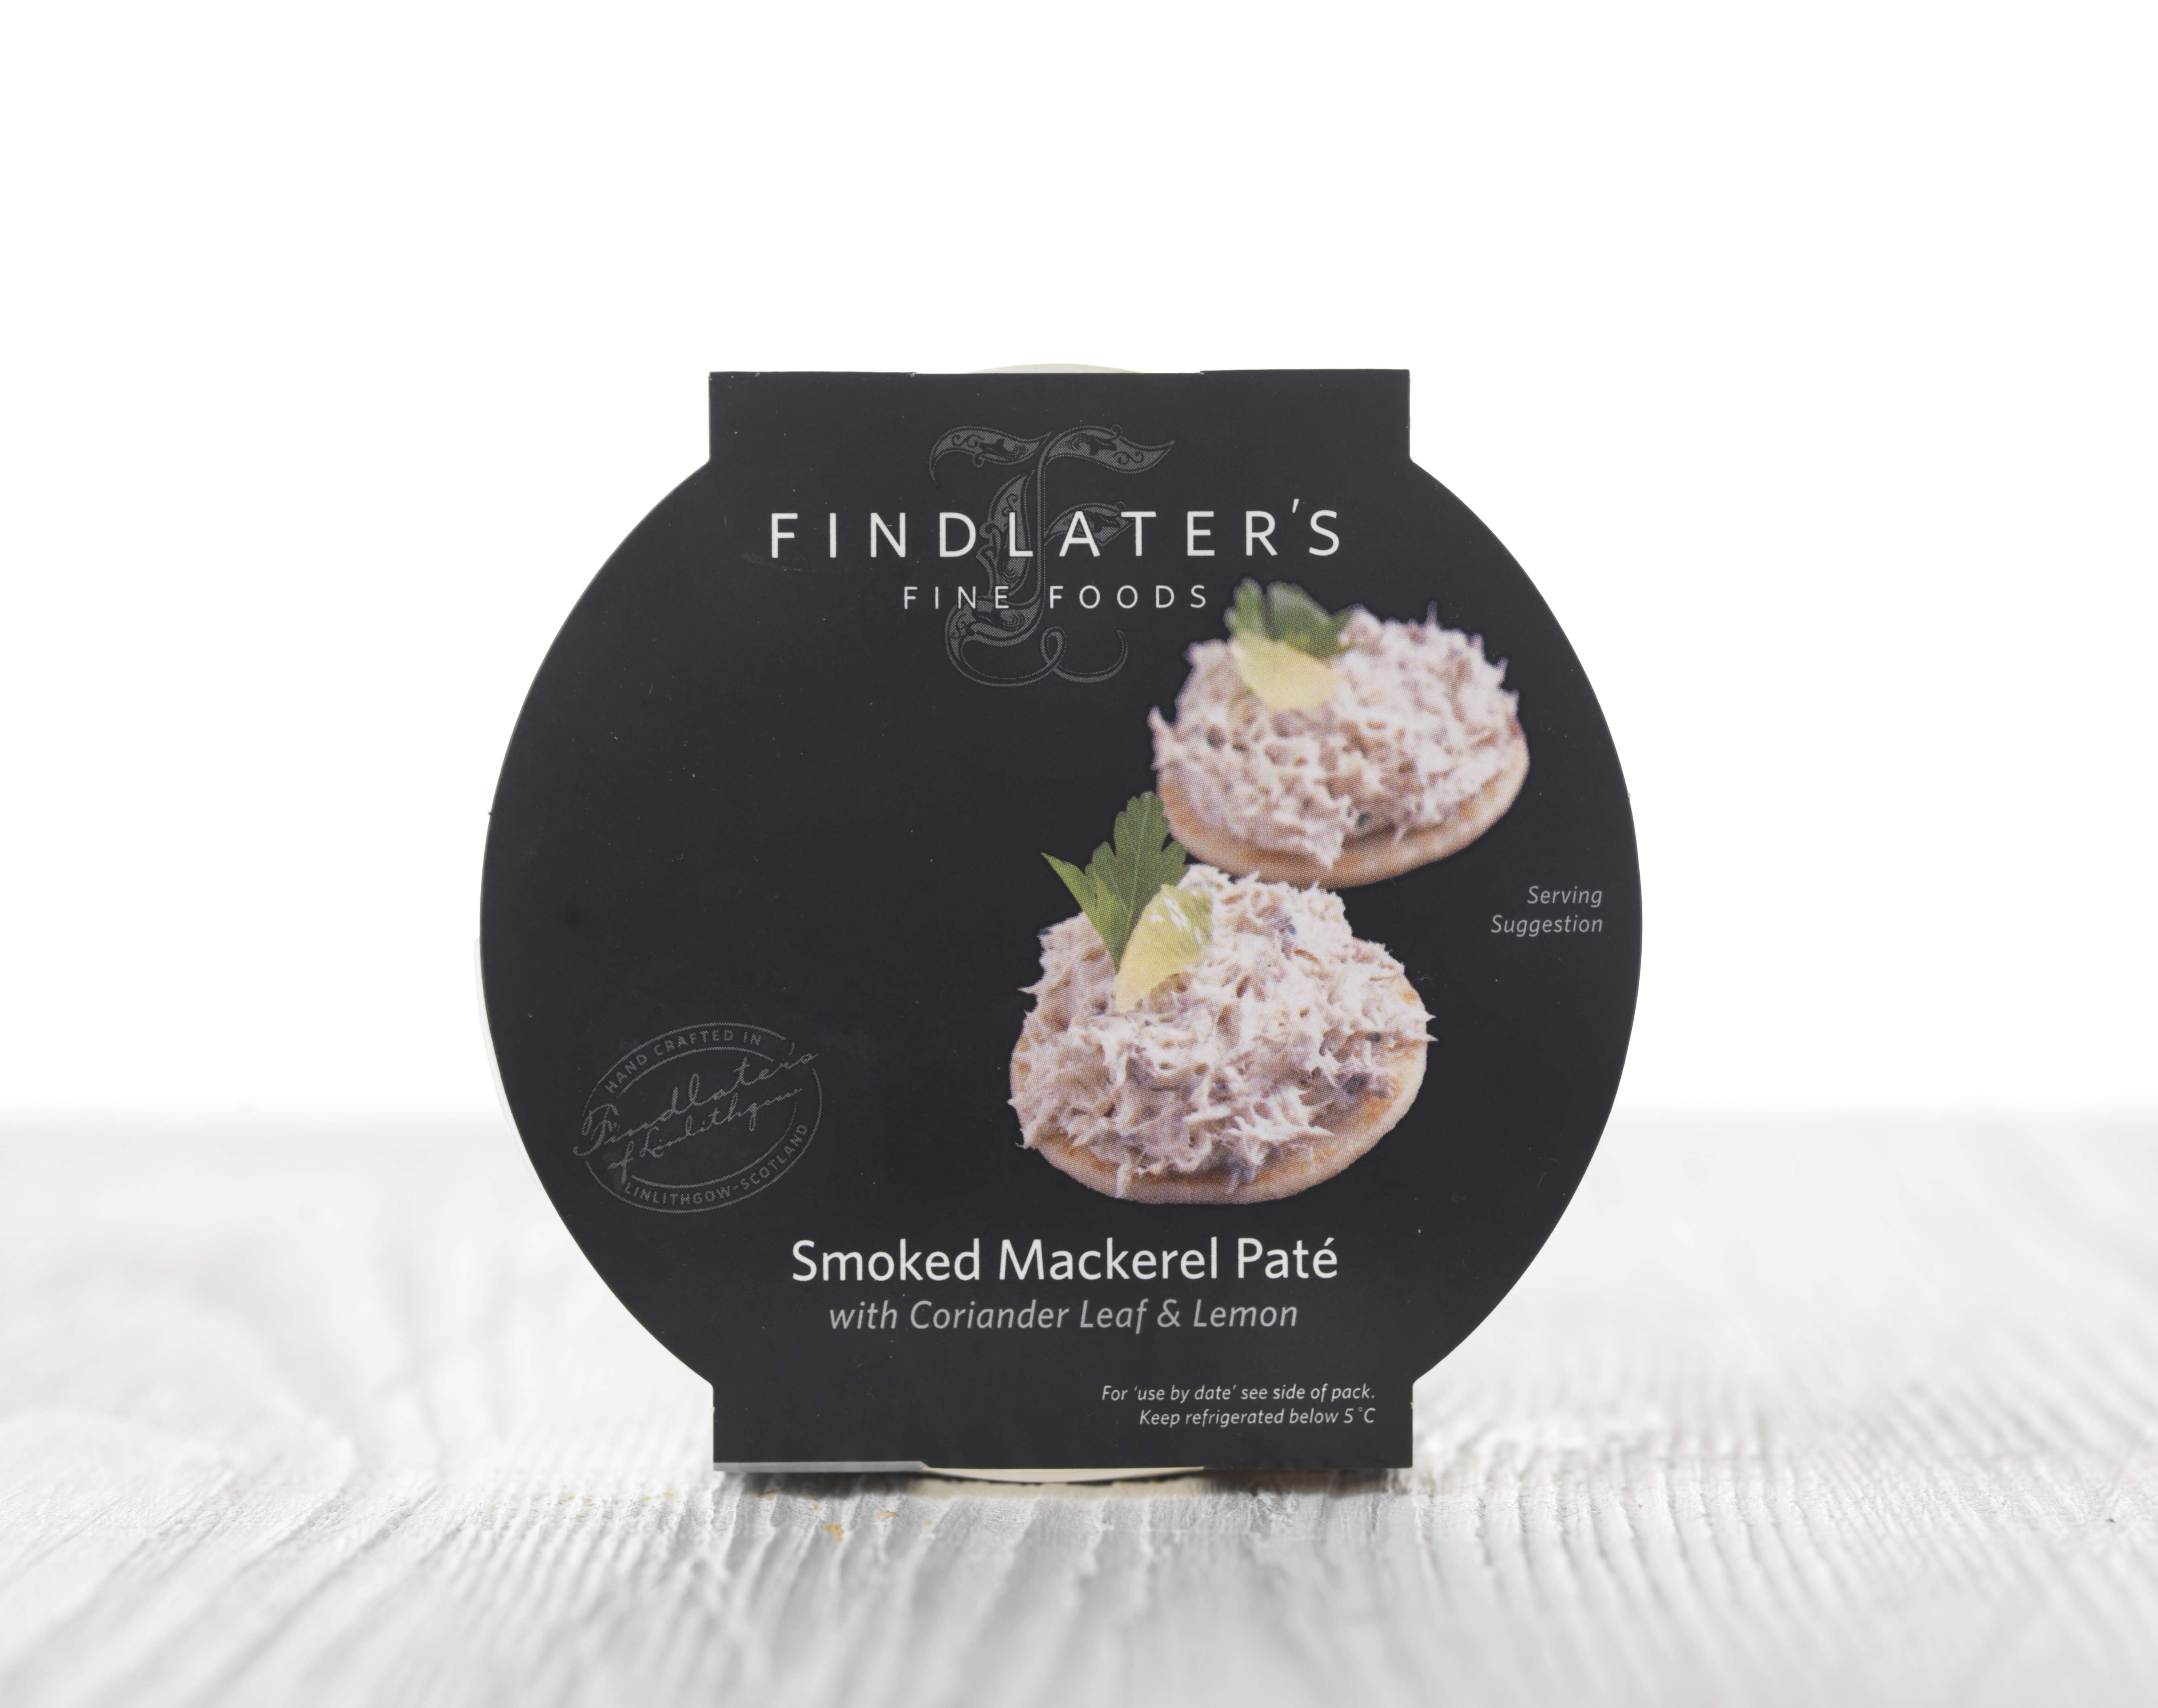 Findlaters Smoked Mackerel Pate